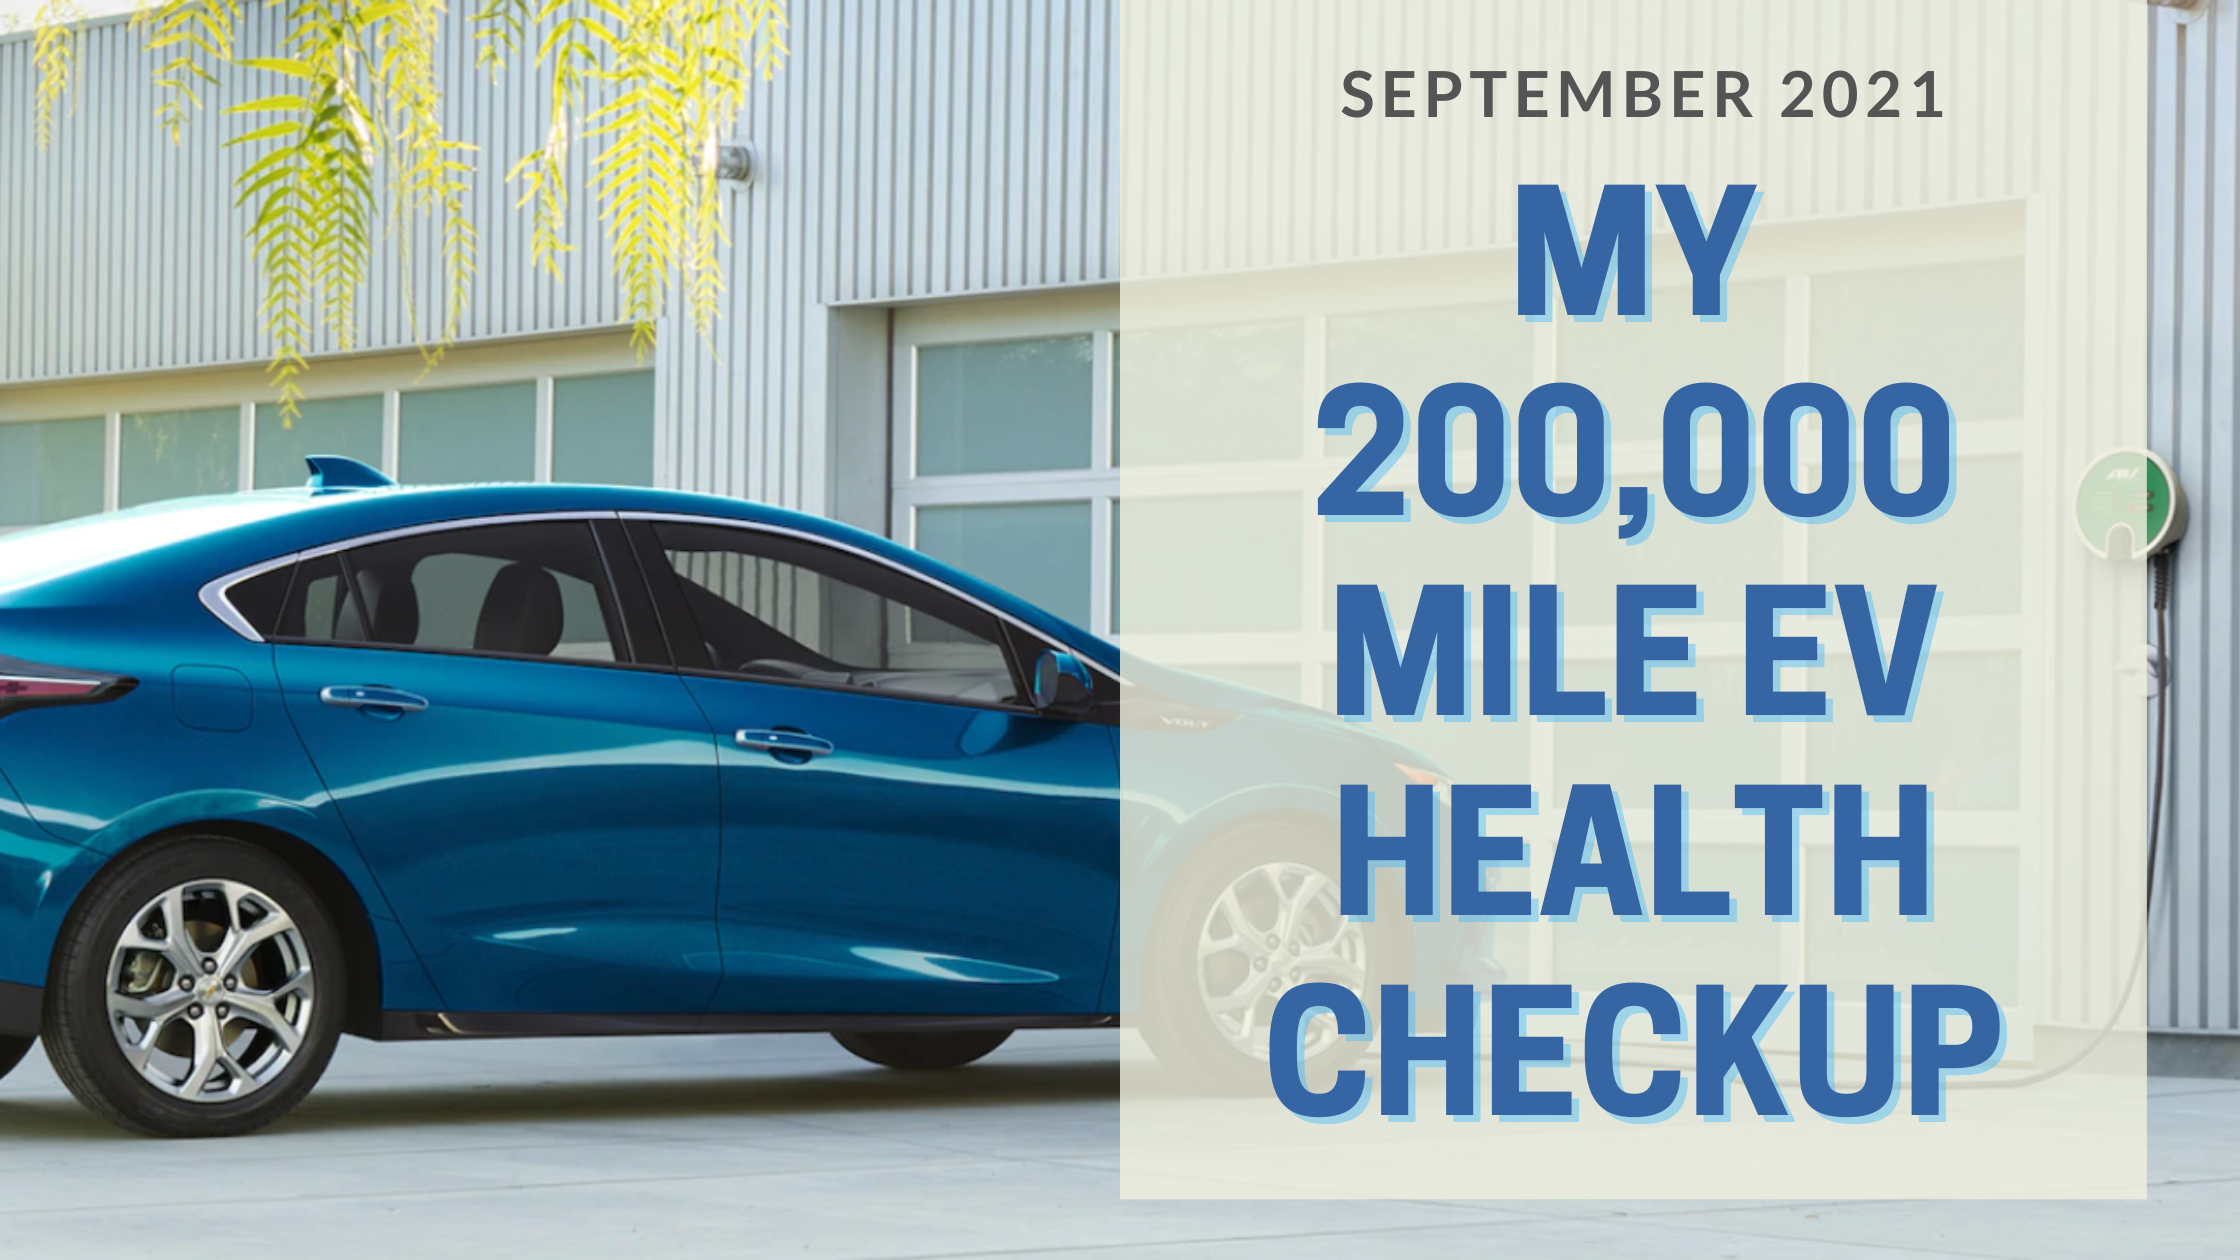 My 200,000 Mile EV Health Check-Up